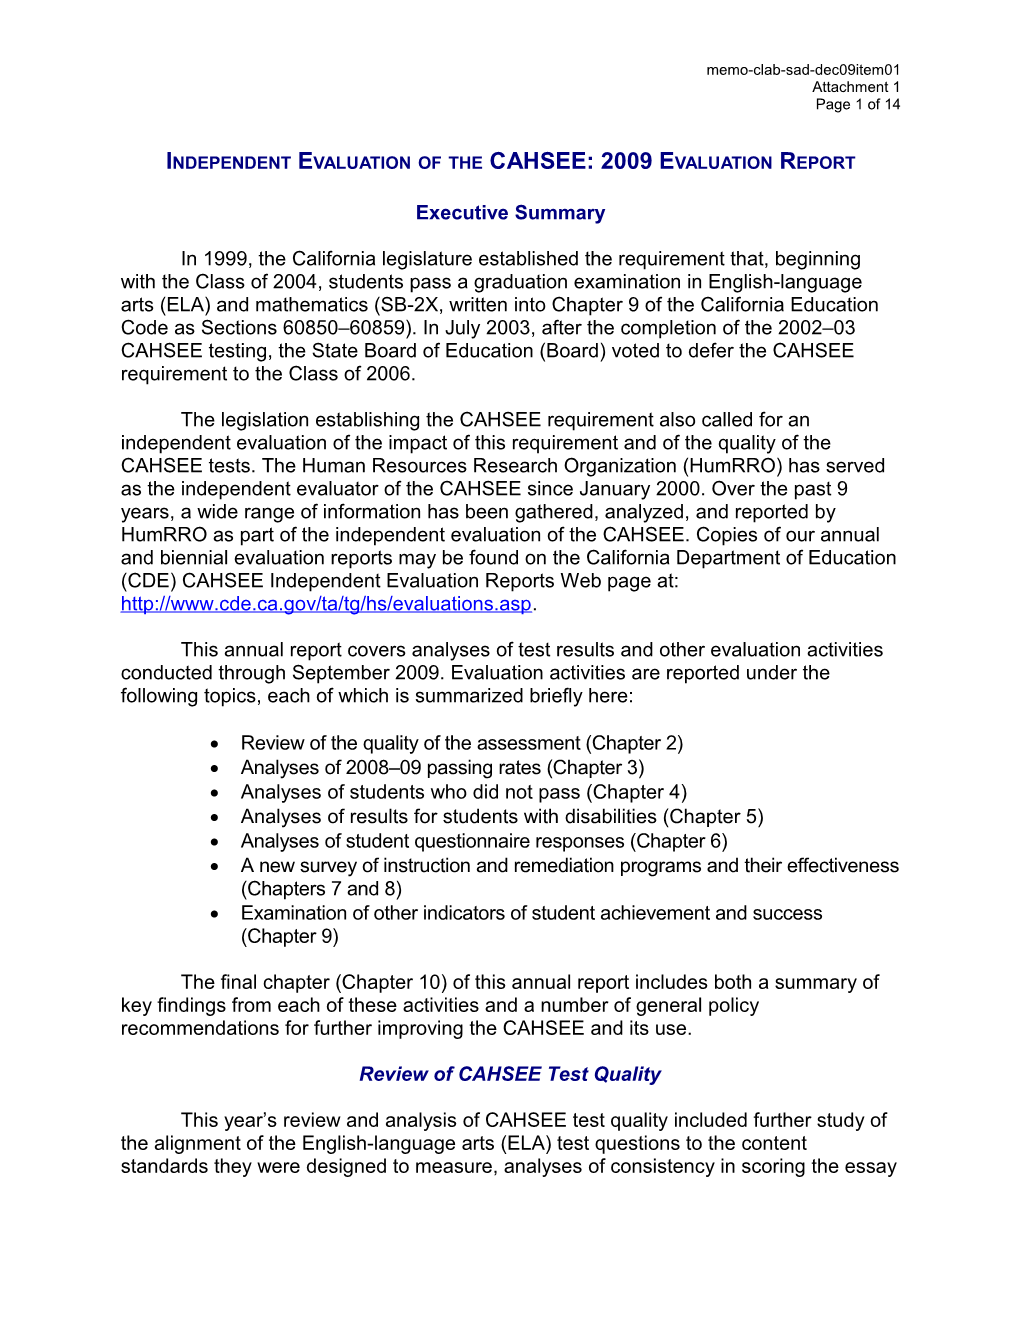 December 2009 CLAB Item 01 Attachment 1 - Informatin Memorandum (CA State Board of Education)